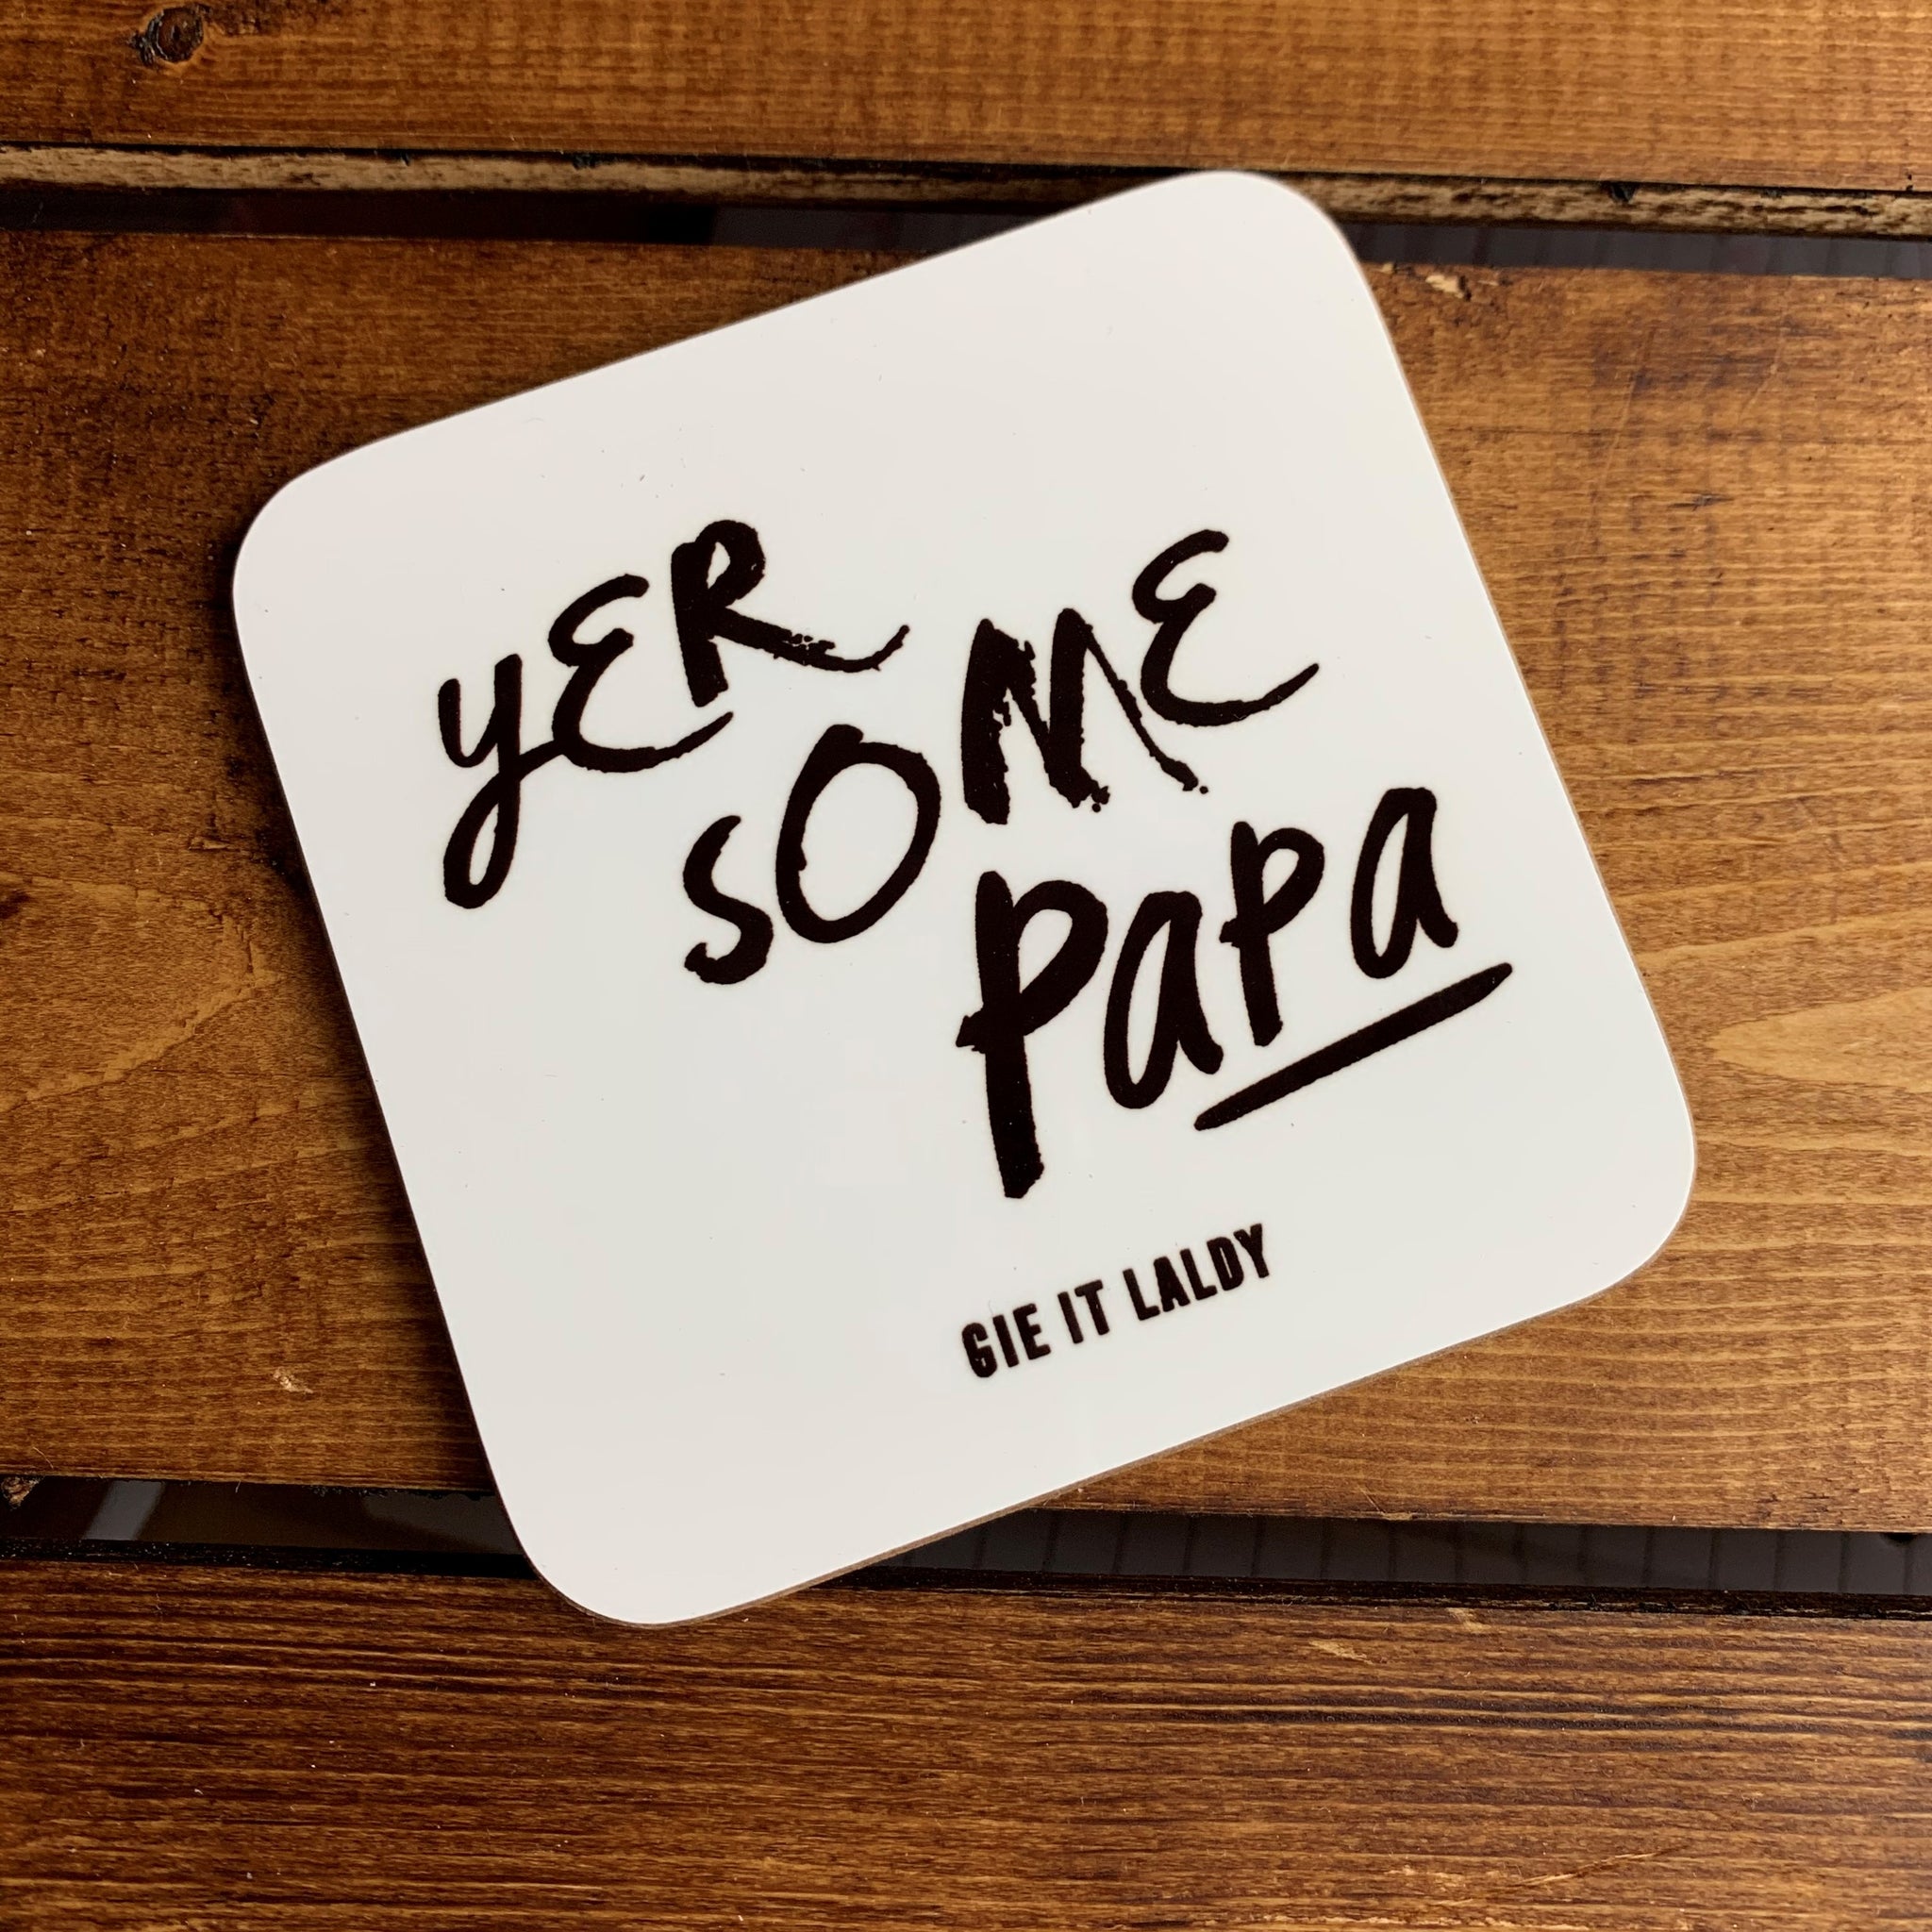 Scottish Slogan Monochrome Coaster featuring the text -  'Yer Some Papa' 